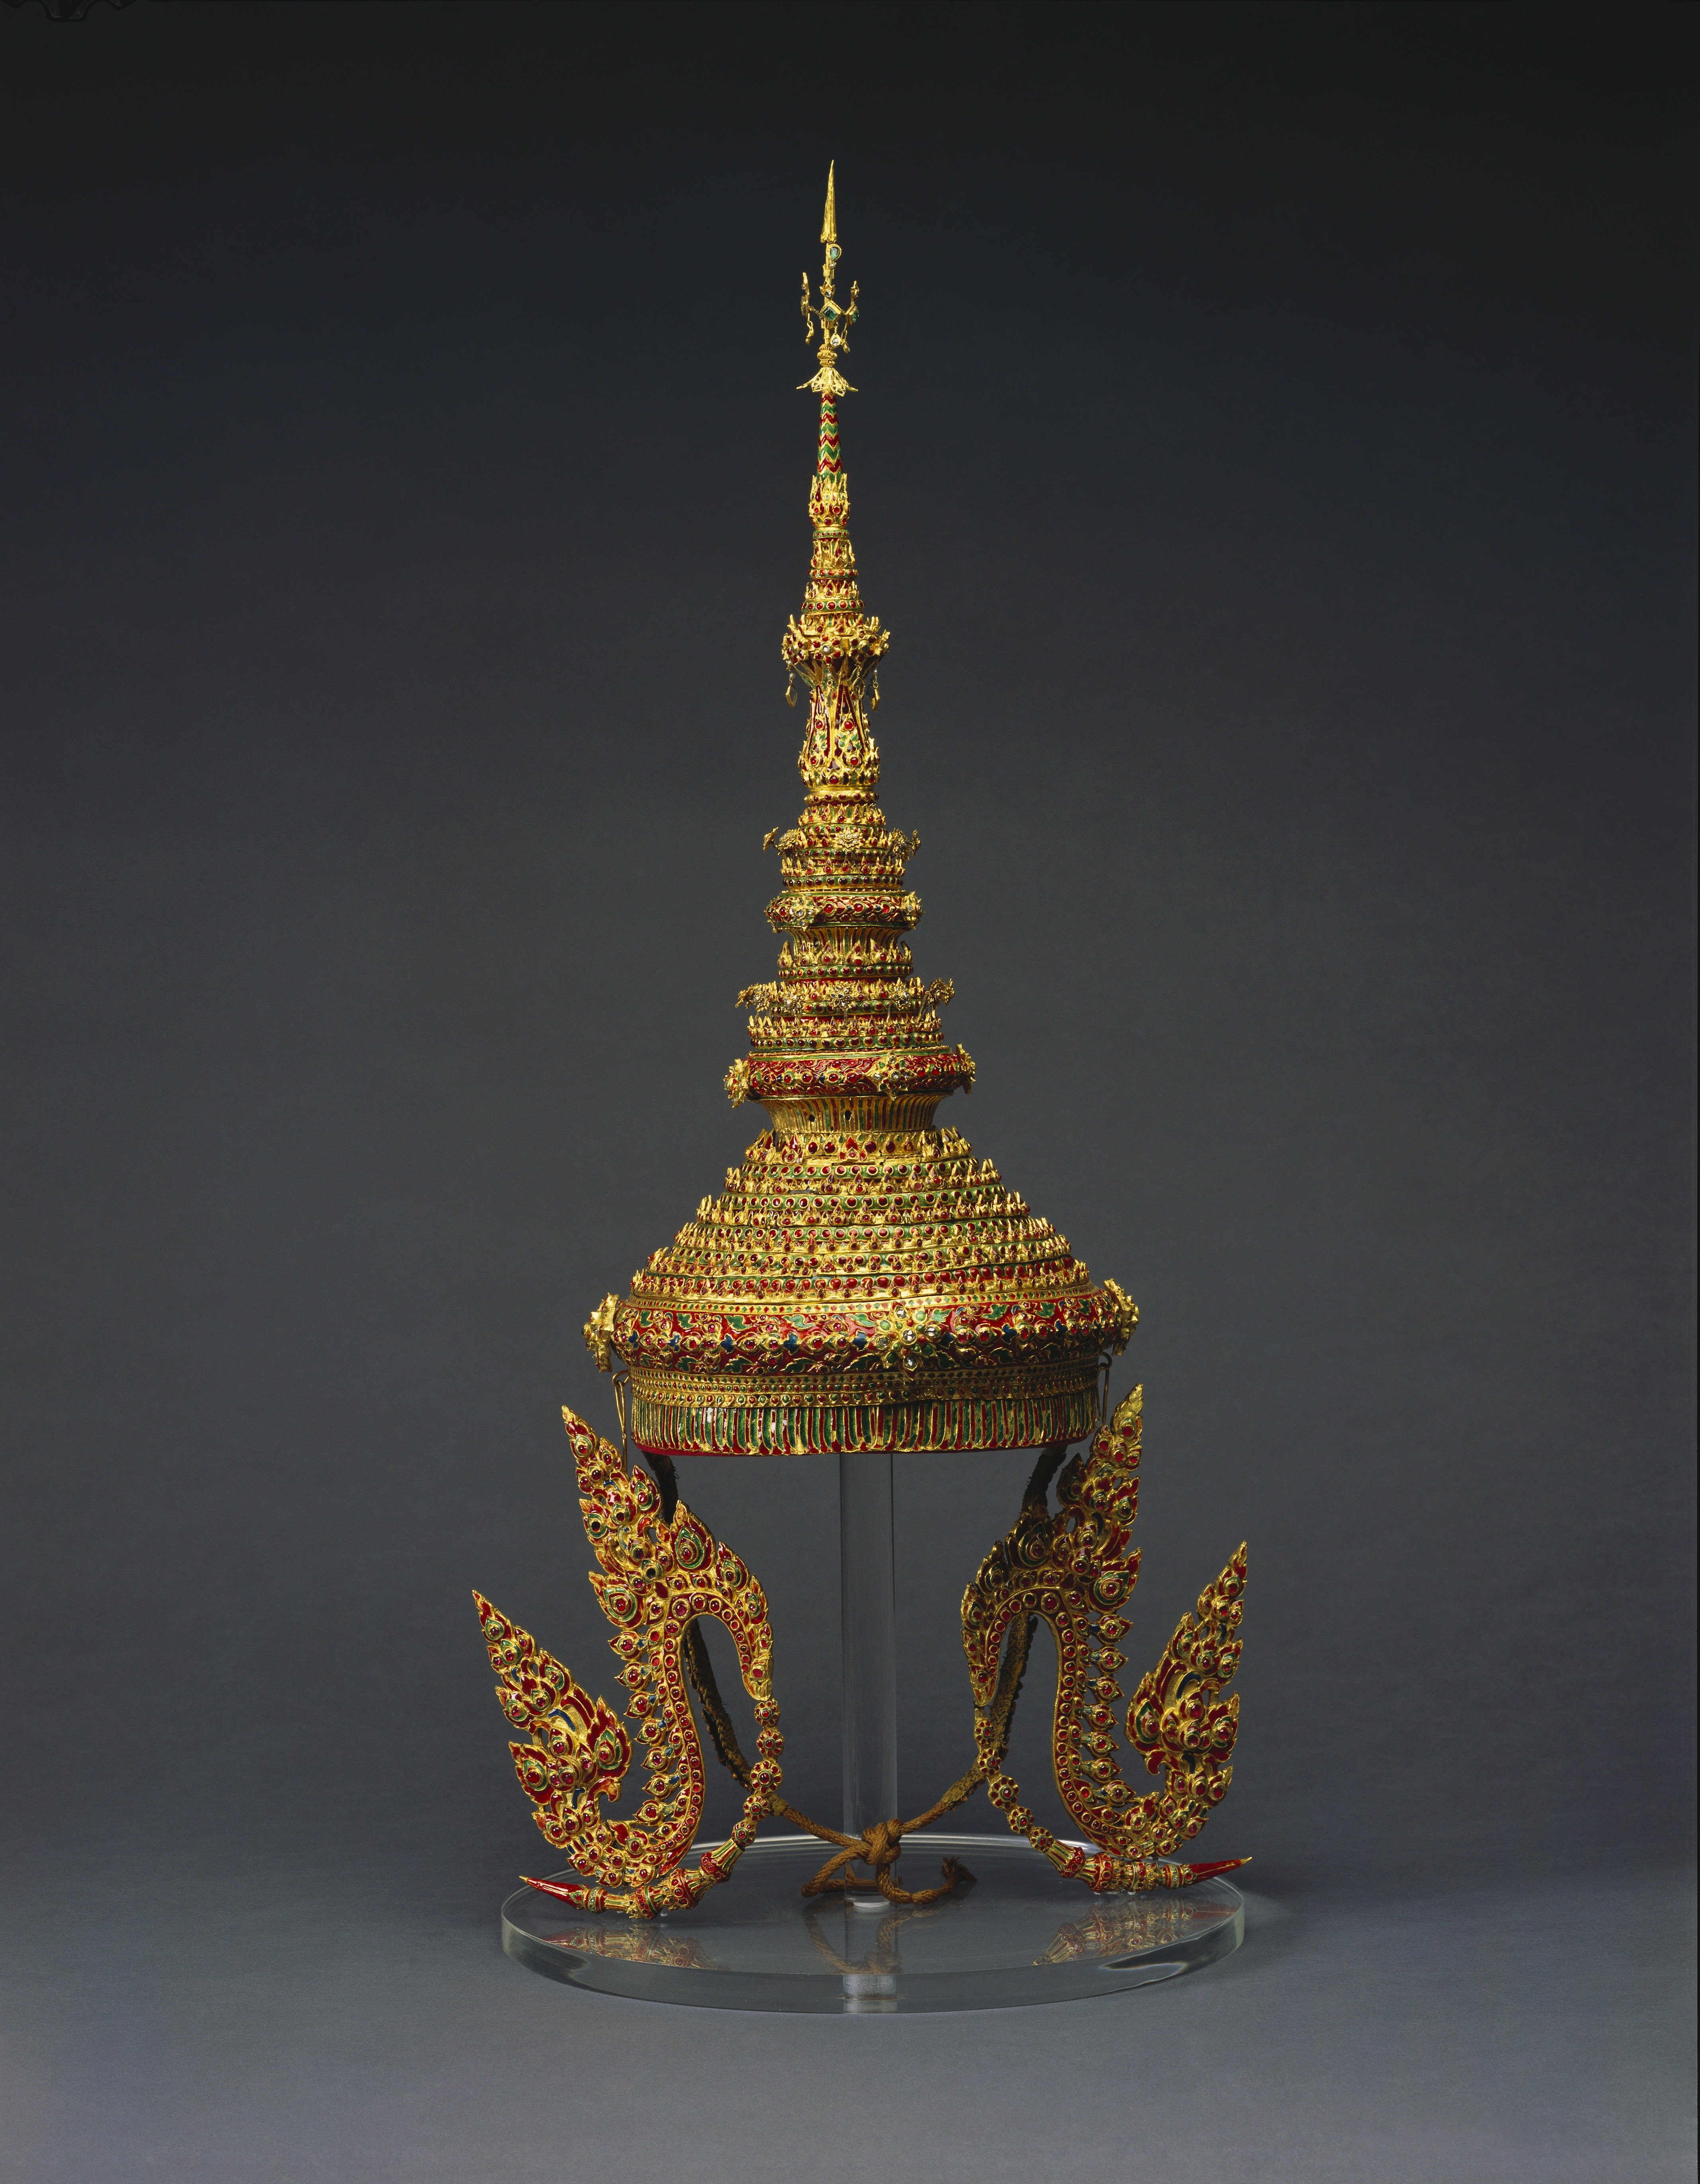 Enamel gifts from King Rama IV